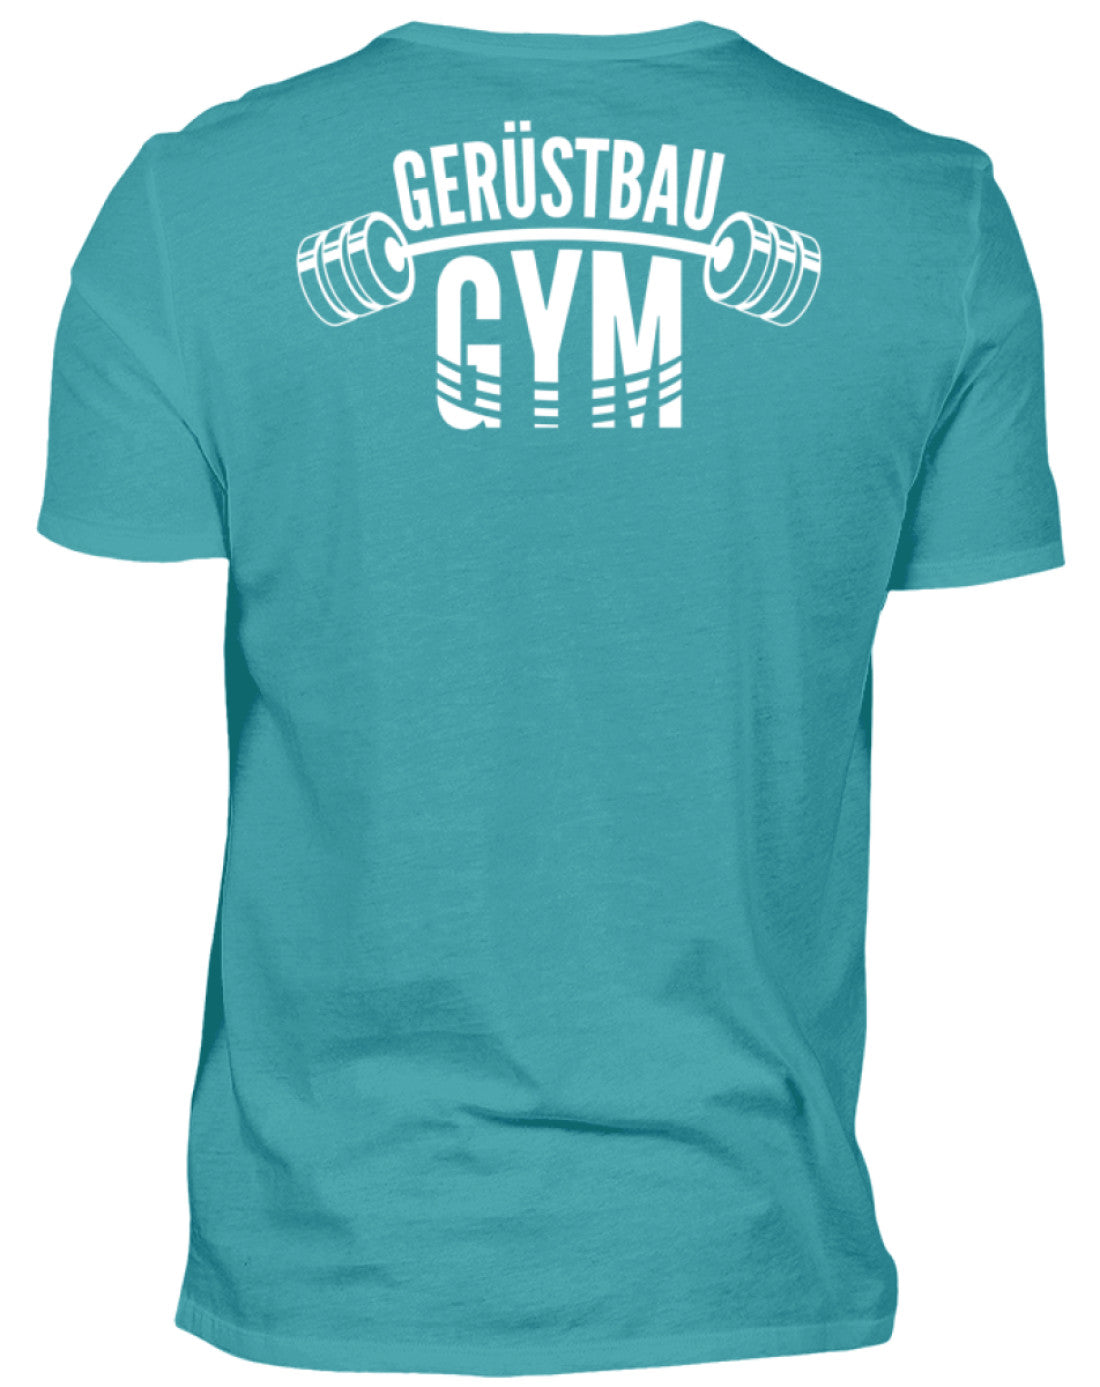 Gerüstbauer T-Shirt / Gerüstbau GYM €24.95 Gerüstbauer - Shop >>